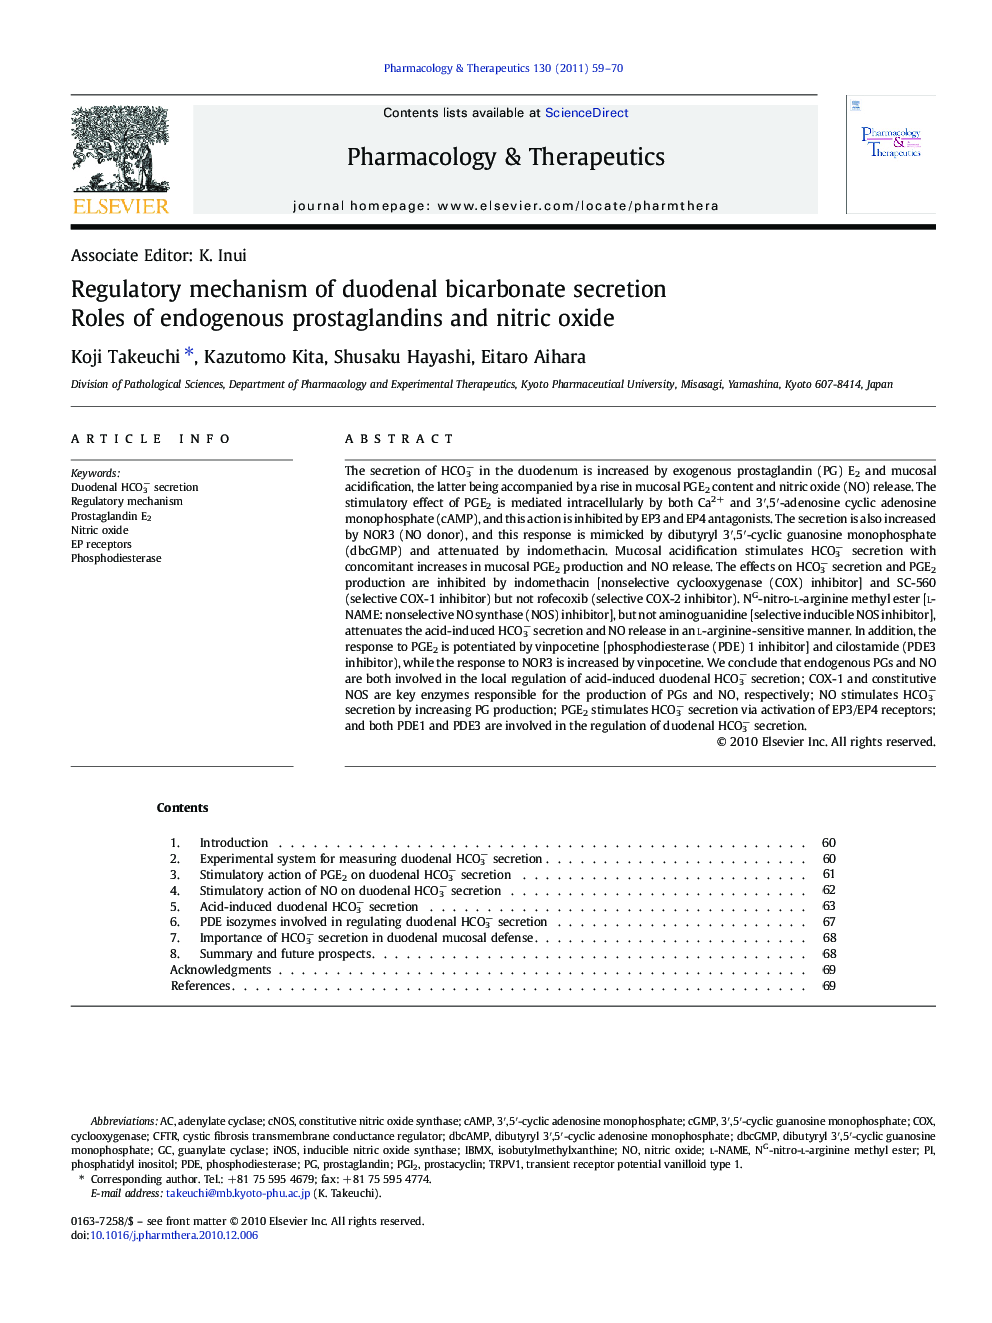 Regulatory mechanism of duodenal bicarbonate secretion